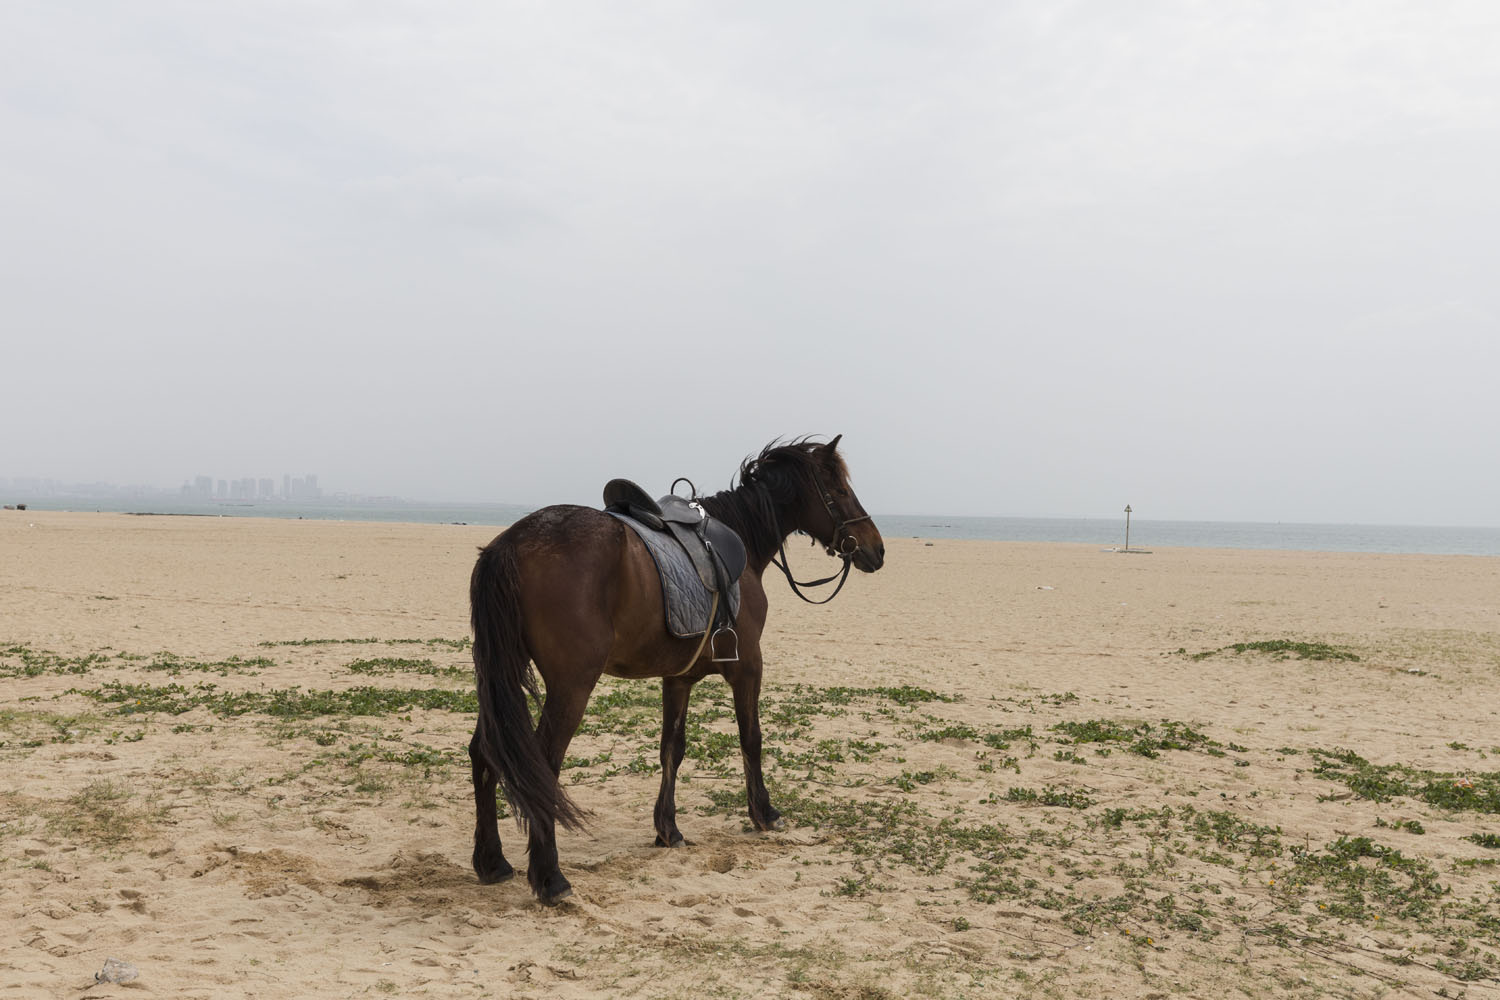 Horse used for wedding photography at Guanyinshan Fantasy Beach. Xiamen, China. 2018.